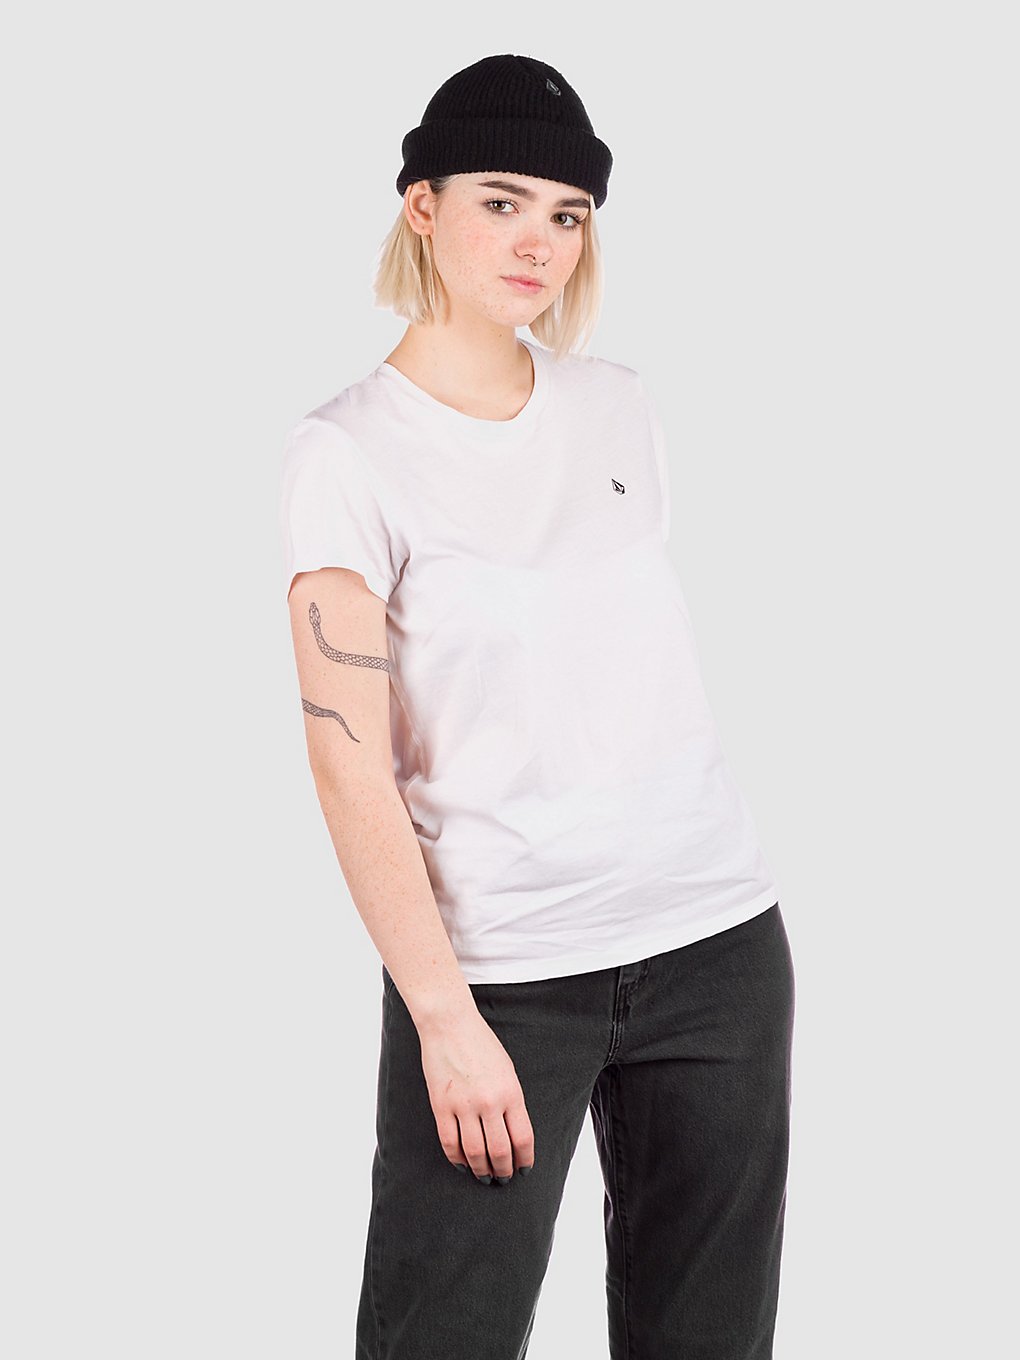 Volcom Stone Blanks T-Shirt white kaufen